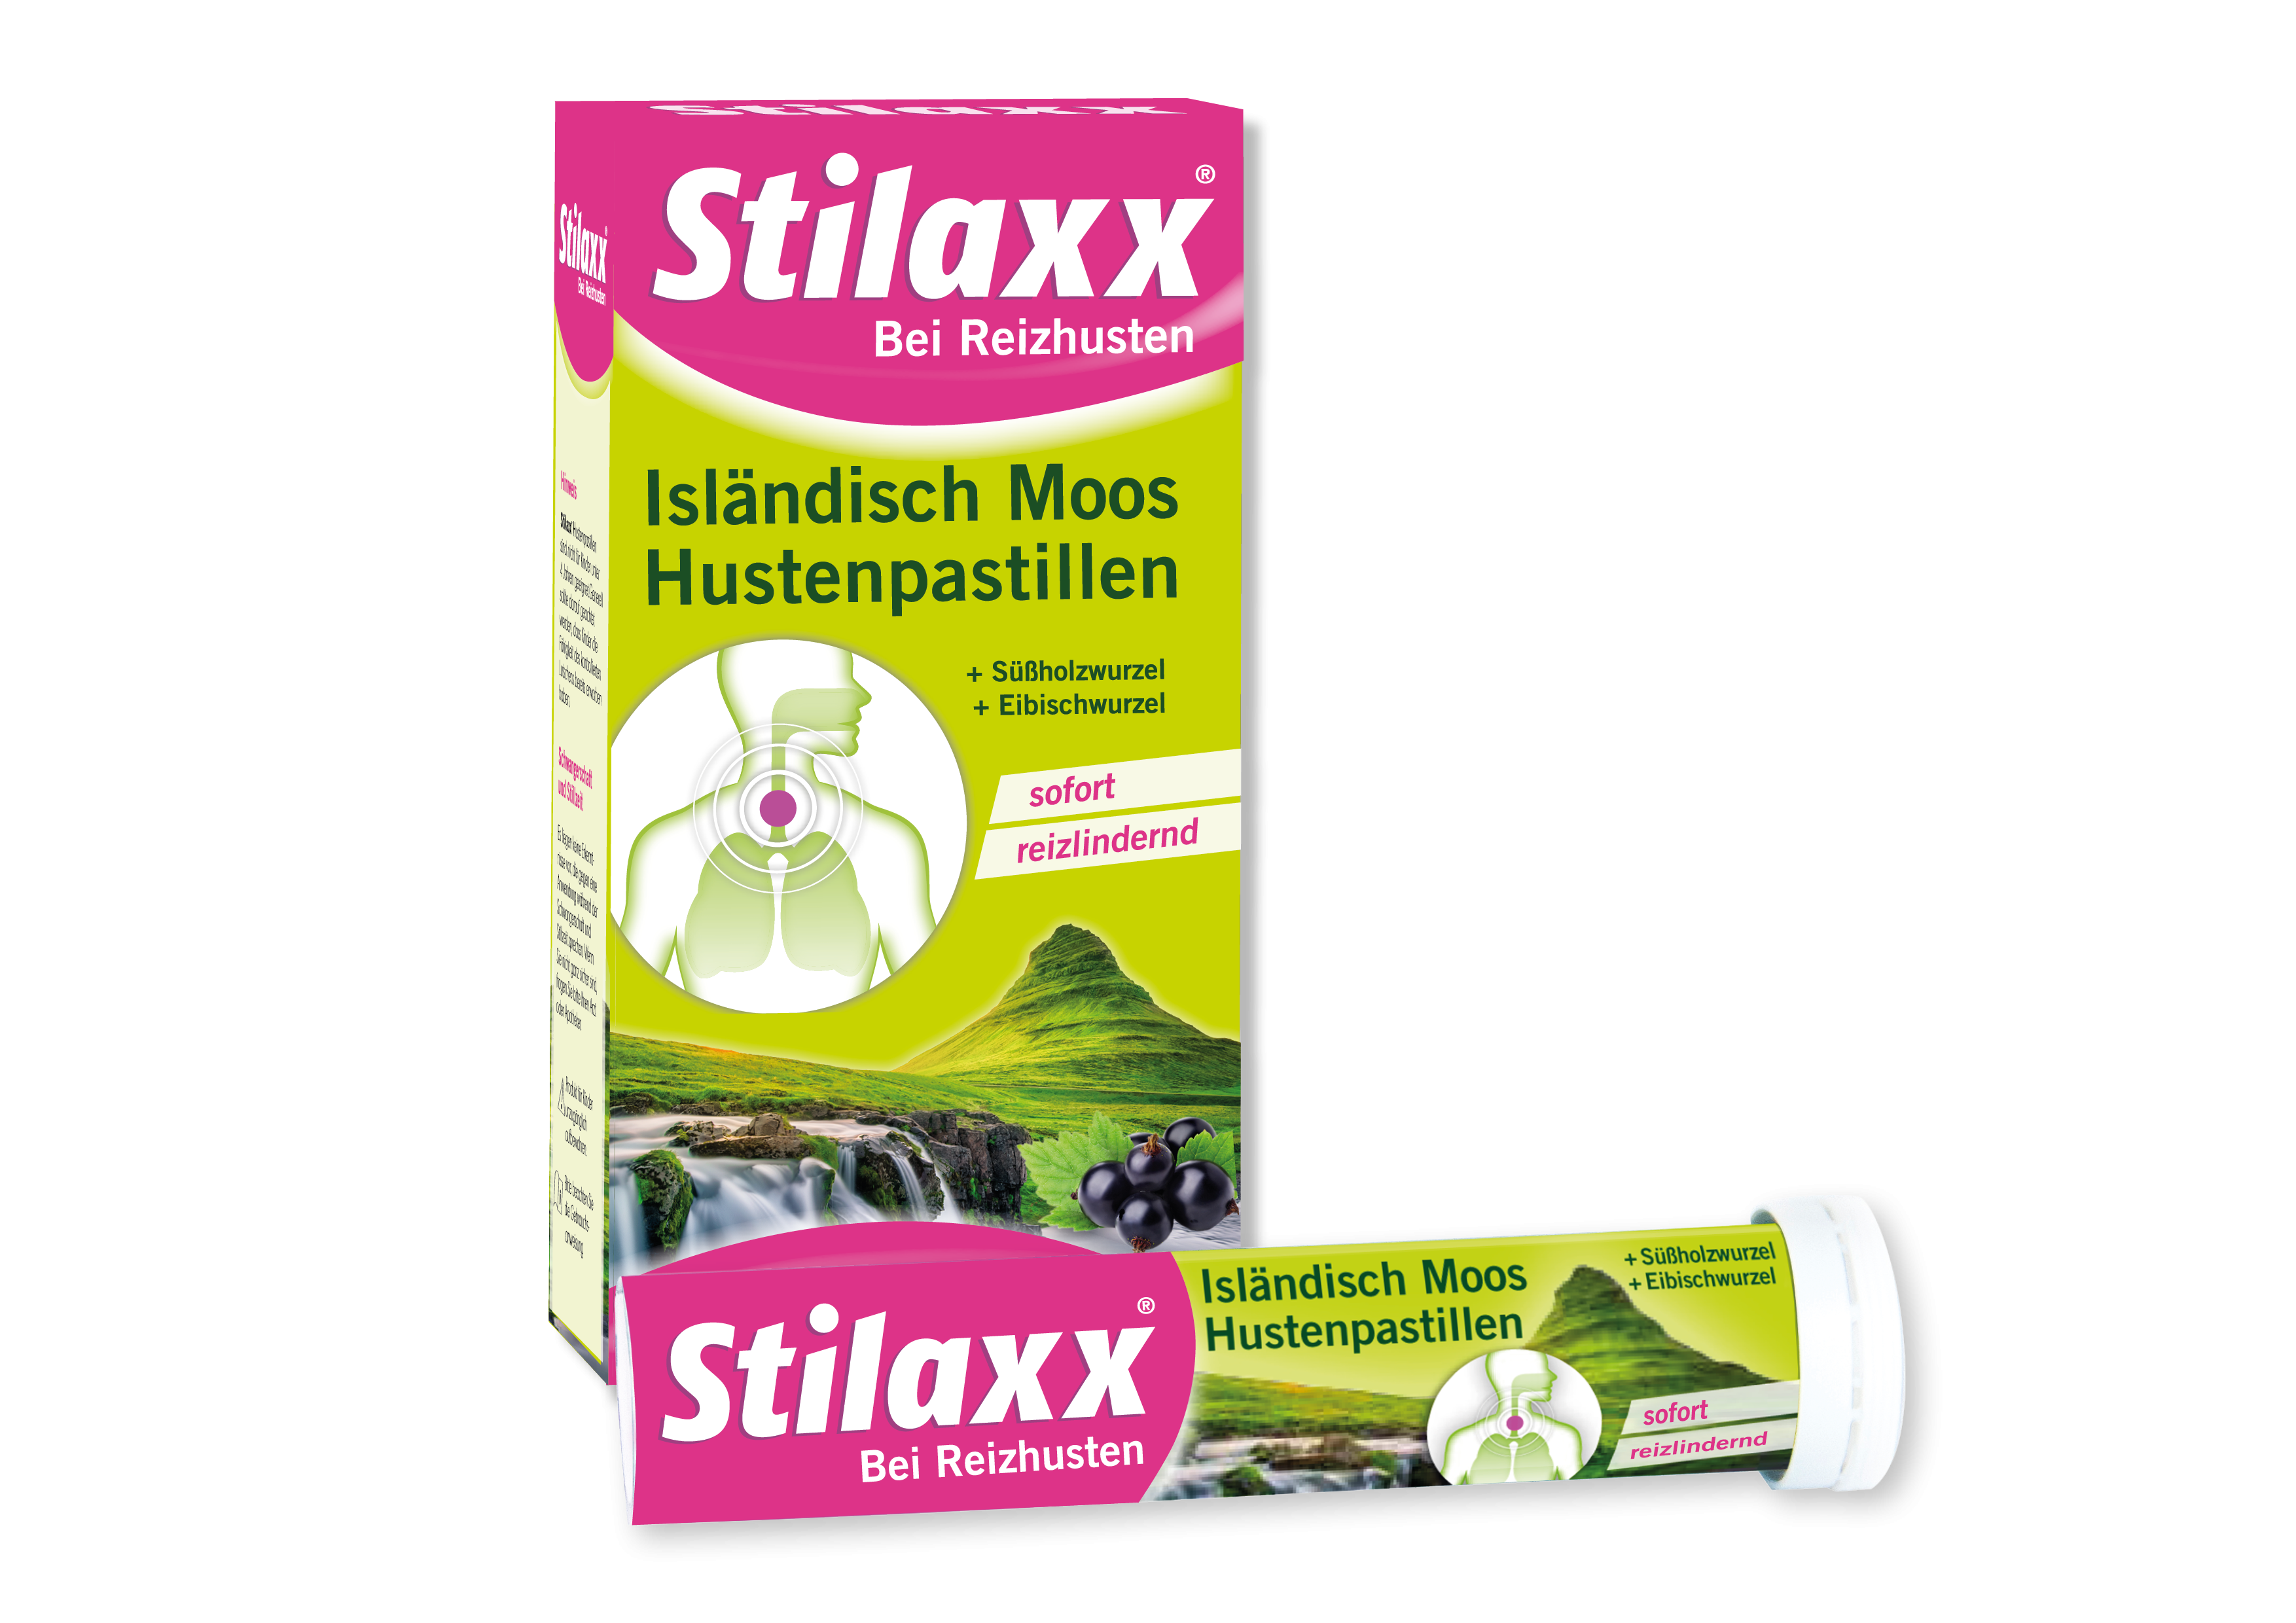 Stilaxx® Hustenpastillen